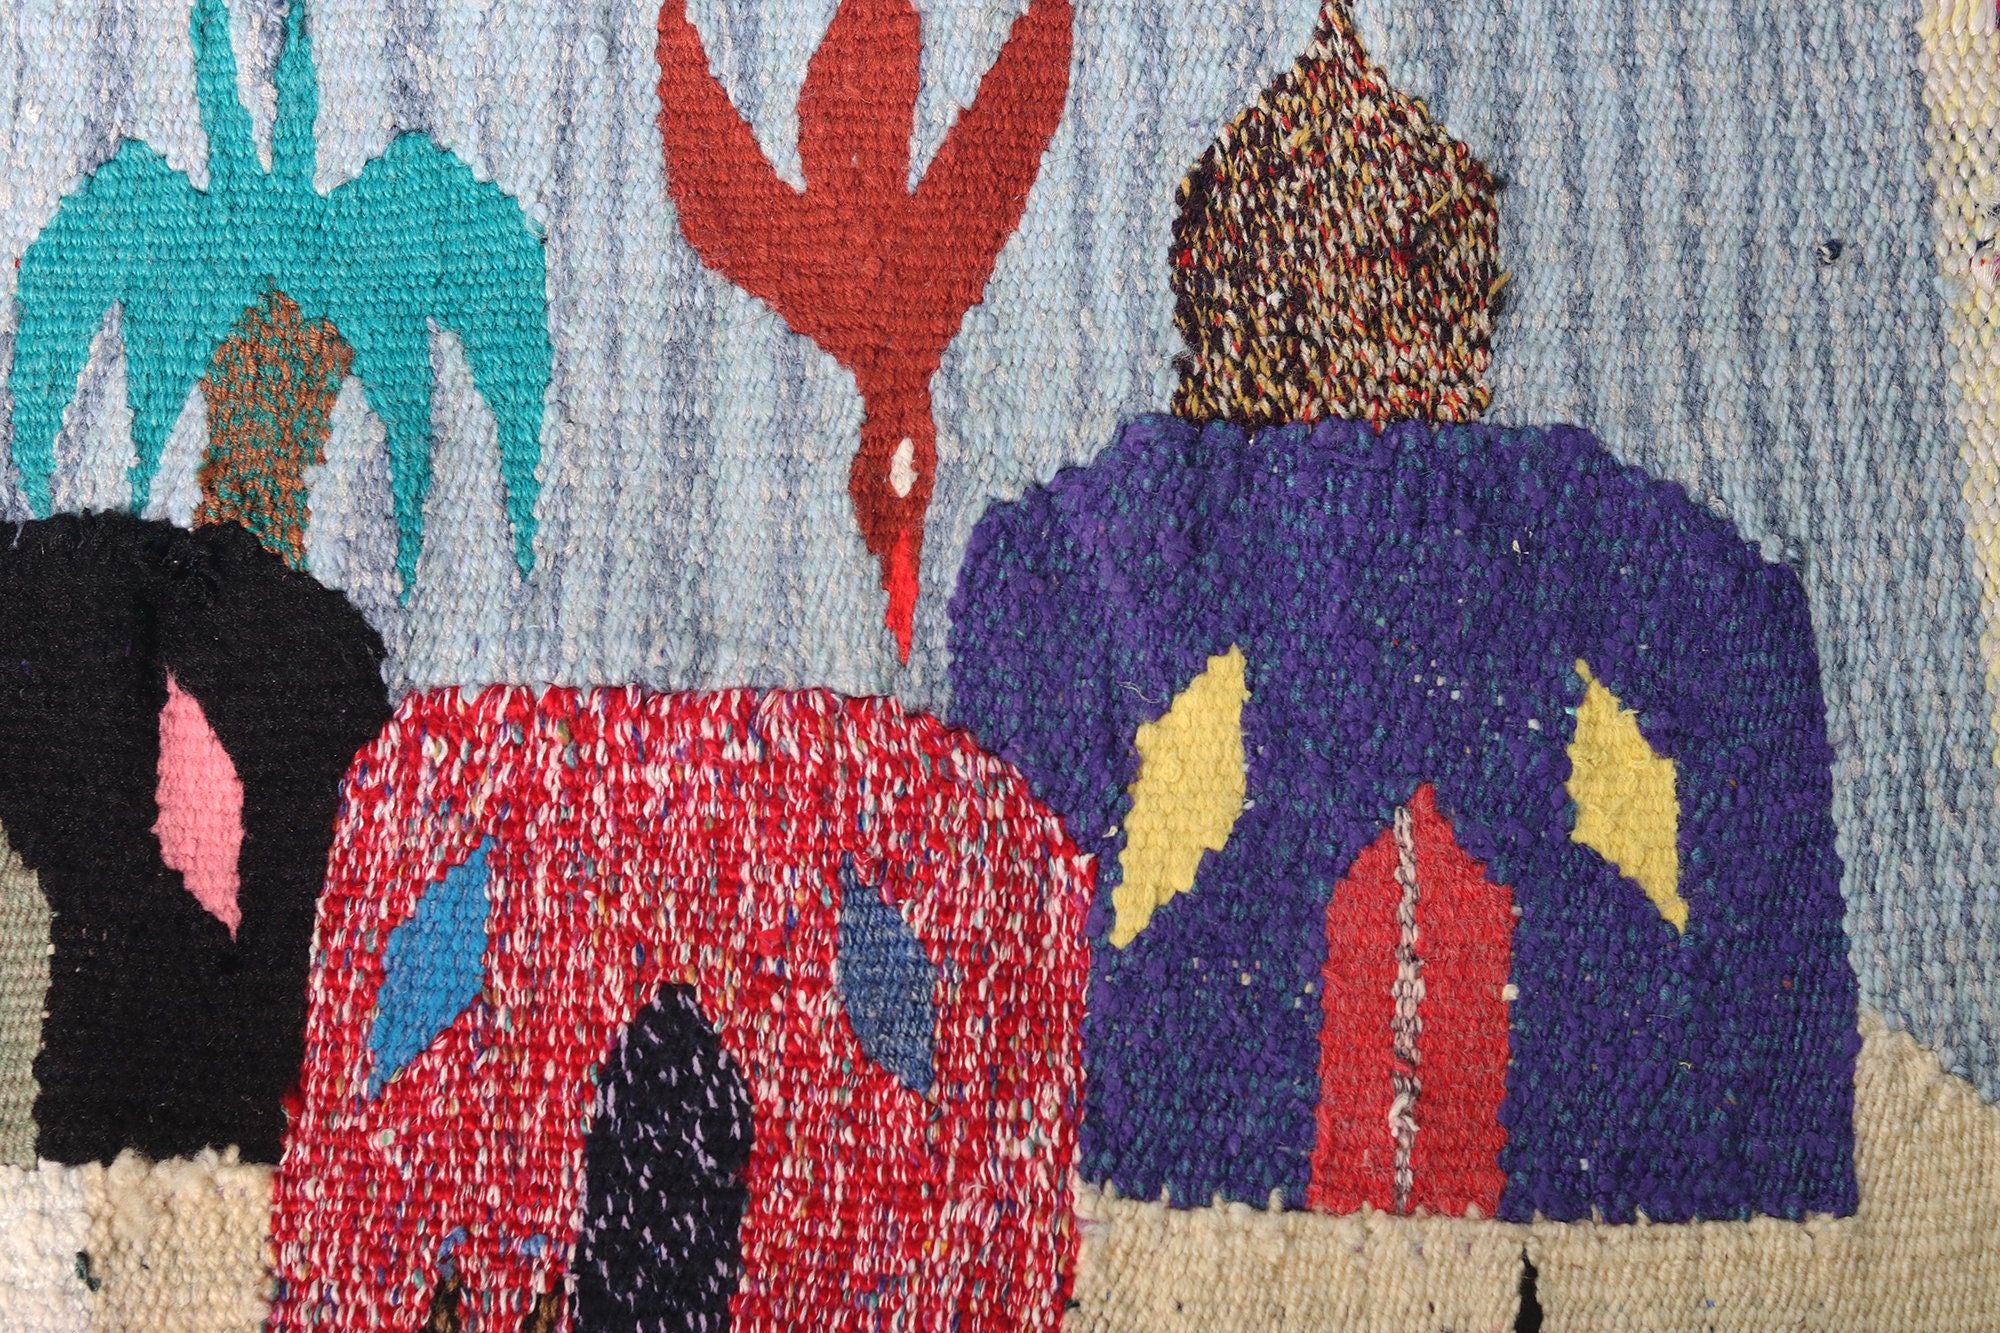 Egyptian Hand Woven Tapestry Wall Hanging-Folk Art Egypt-Wool Kilim Rug